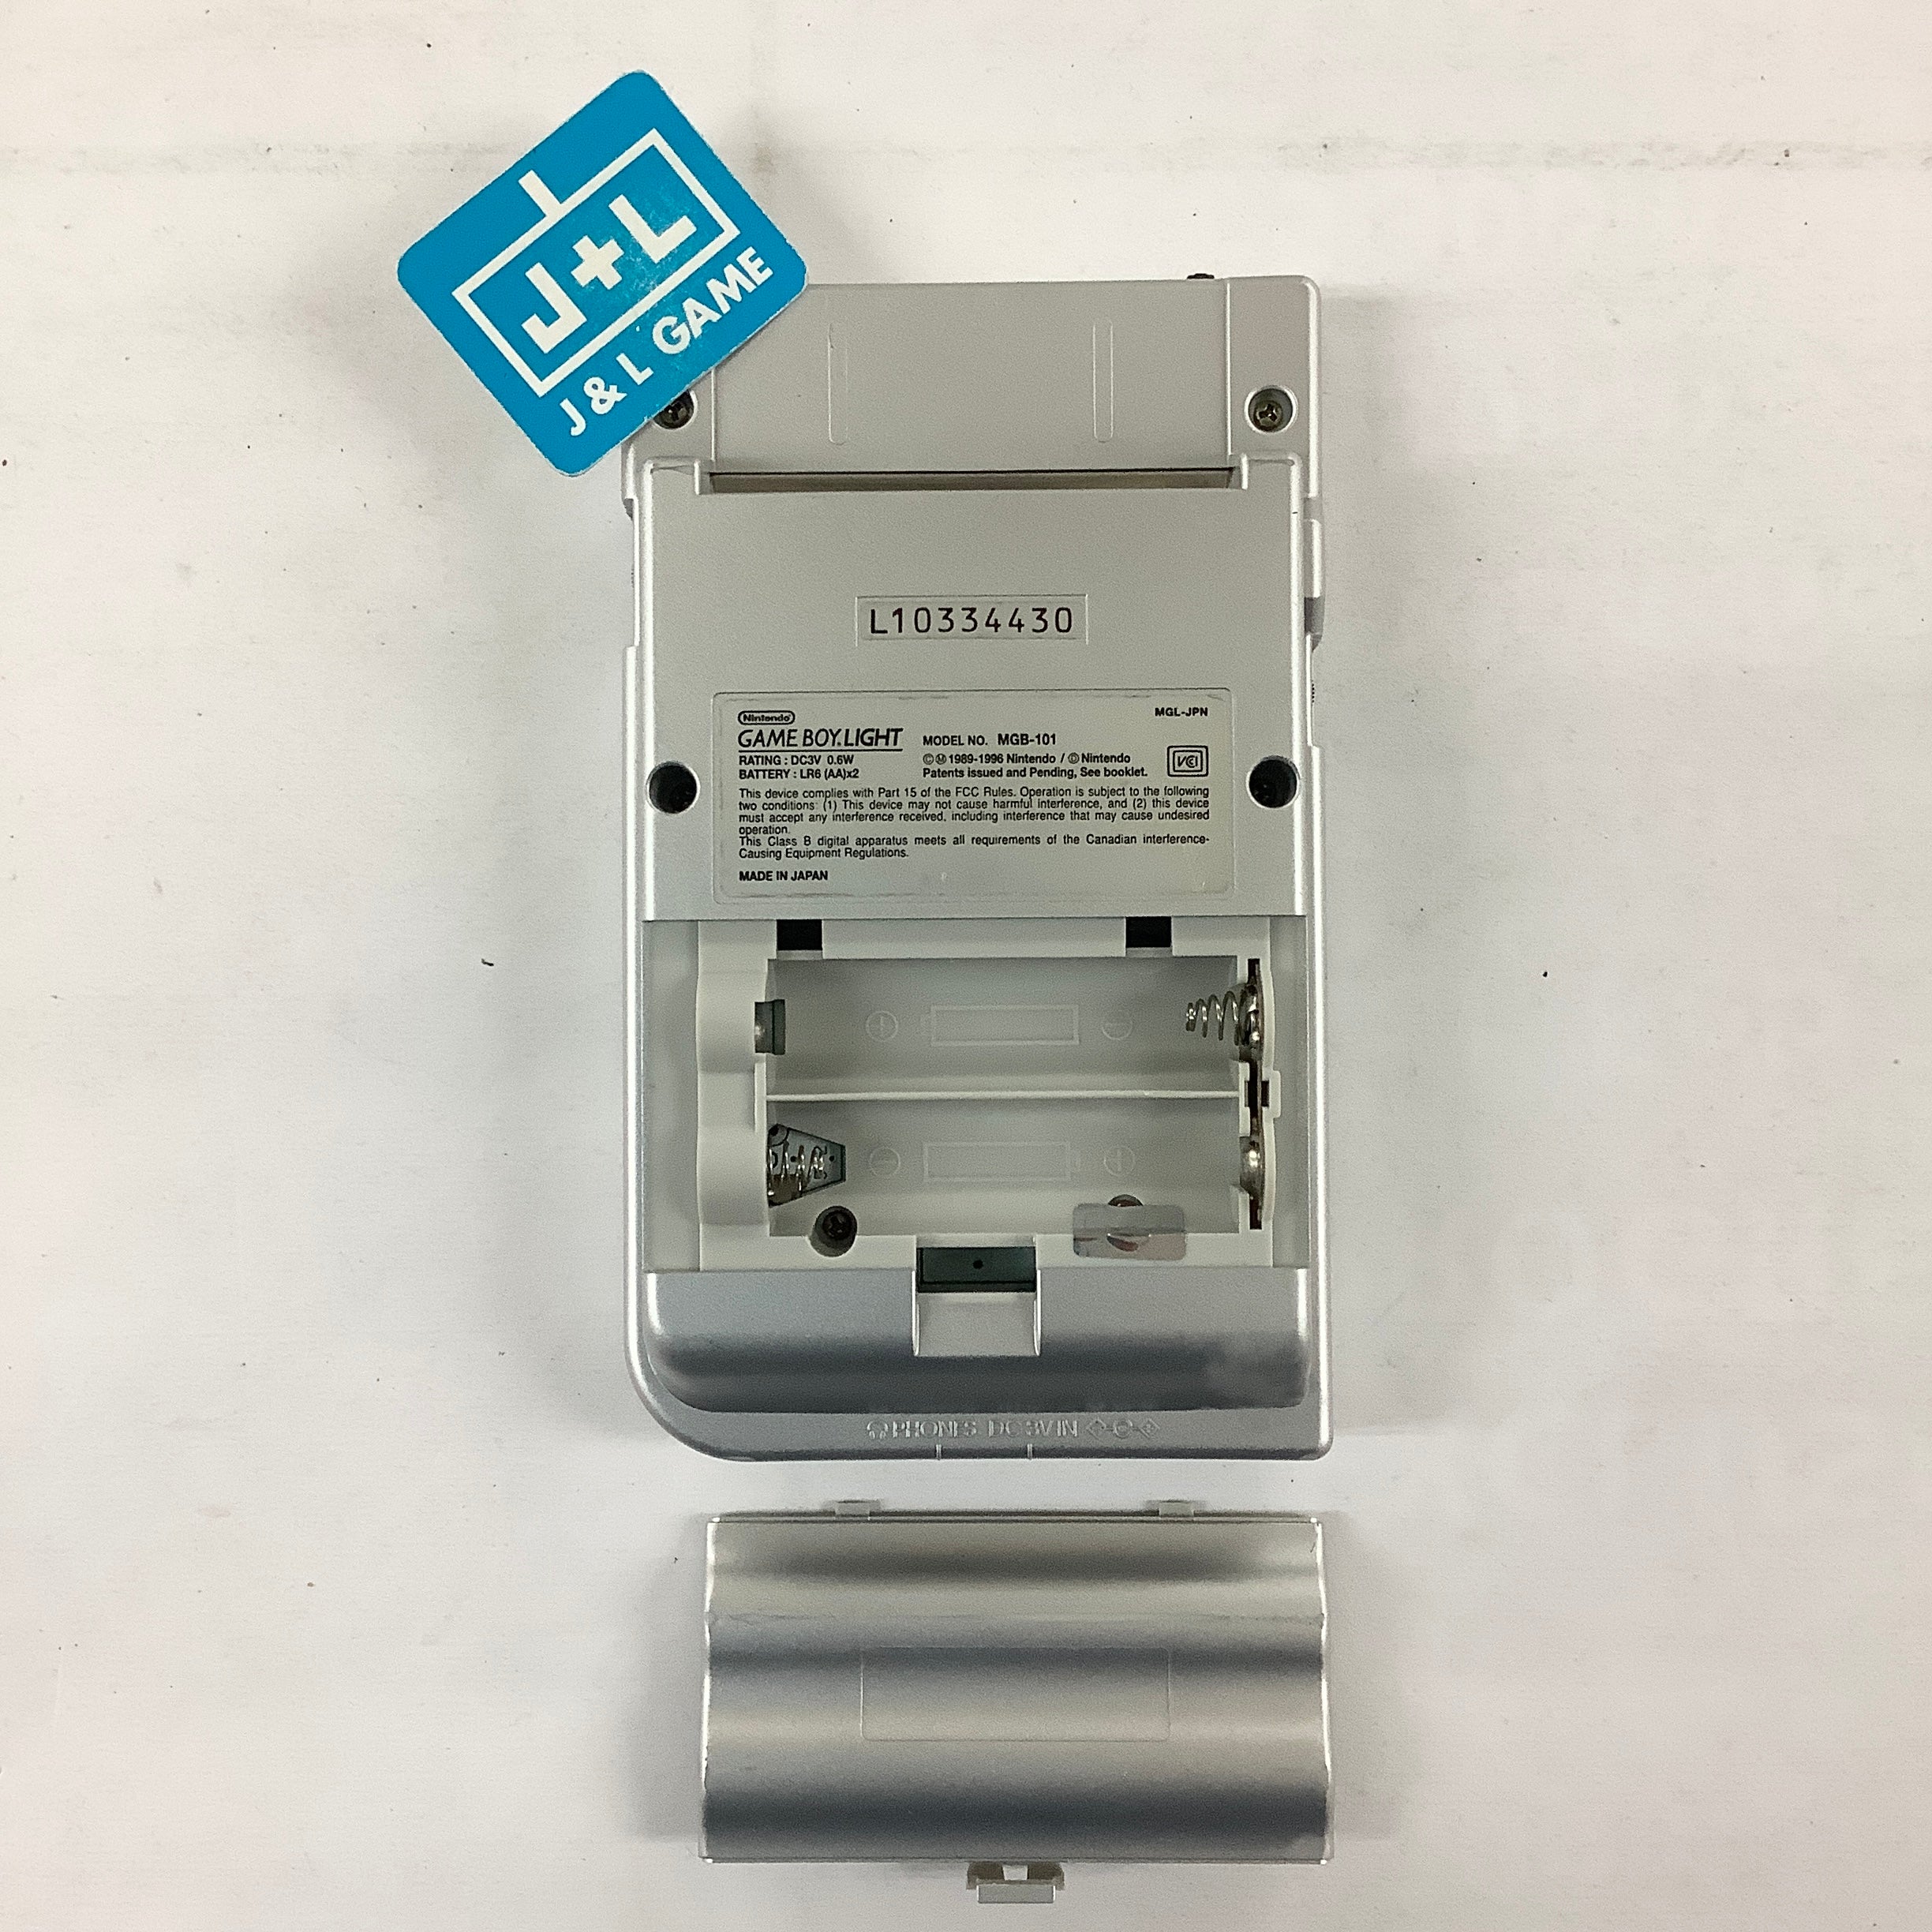 Nintendo Game Boy Light (Silver) - (GBP) Game Boy Pocket [Pre-Owned] (Japanese Import) Consoles Nintendo   